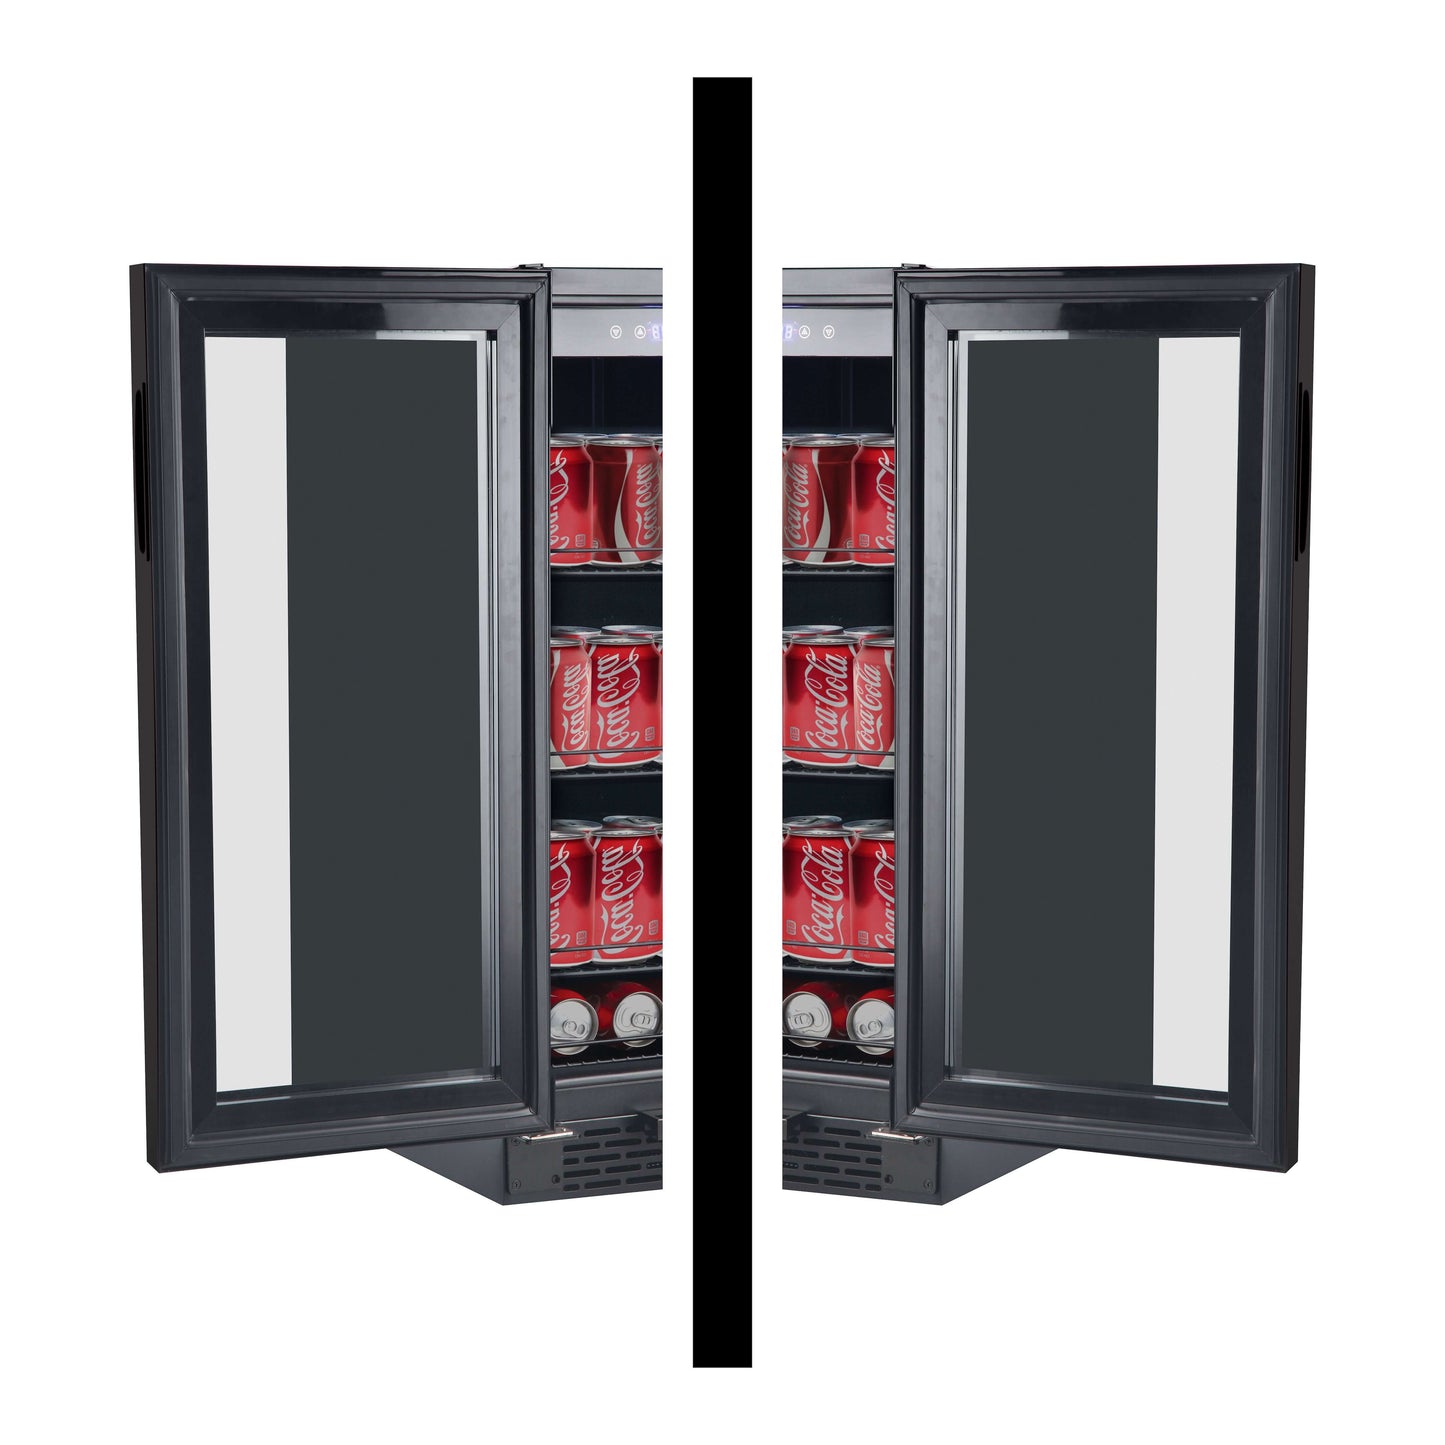 Whynter BBR-801BG Built-in Black Glass 80-can capacity 3.0 cu ft. Beverage Refrigerator